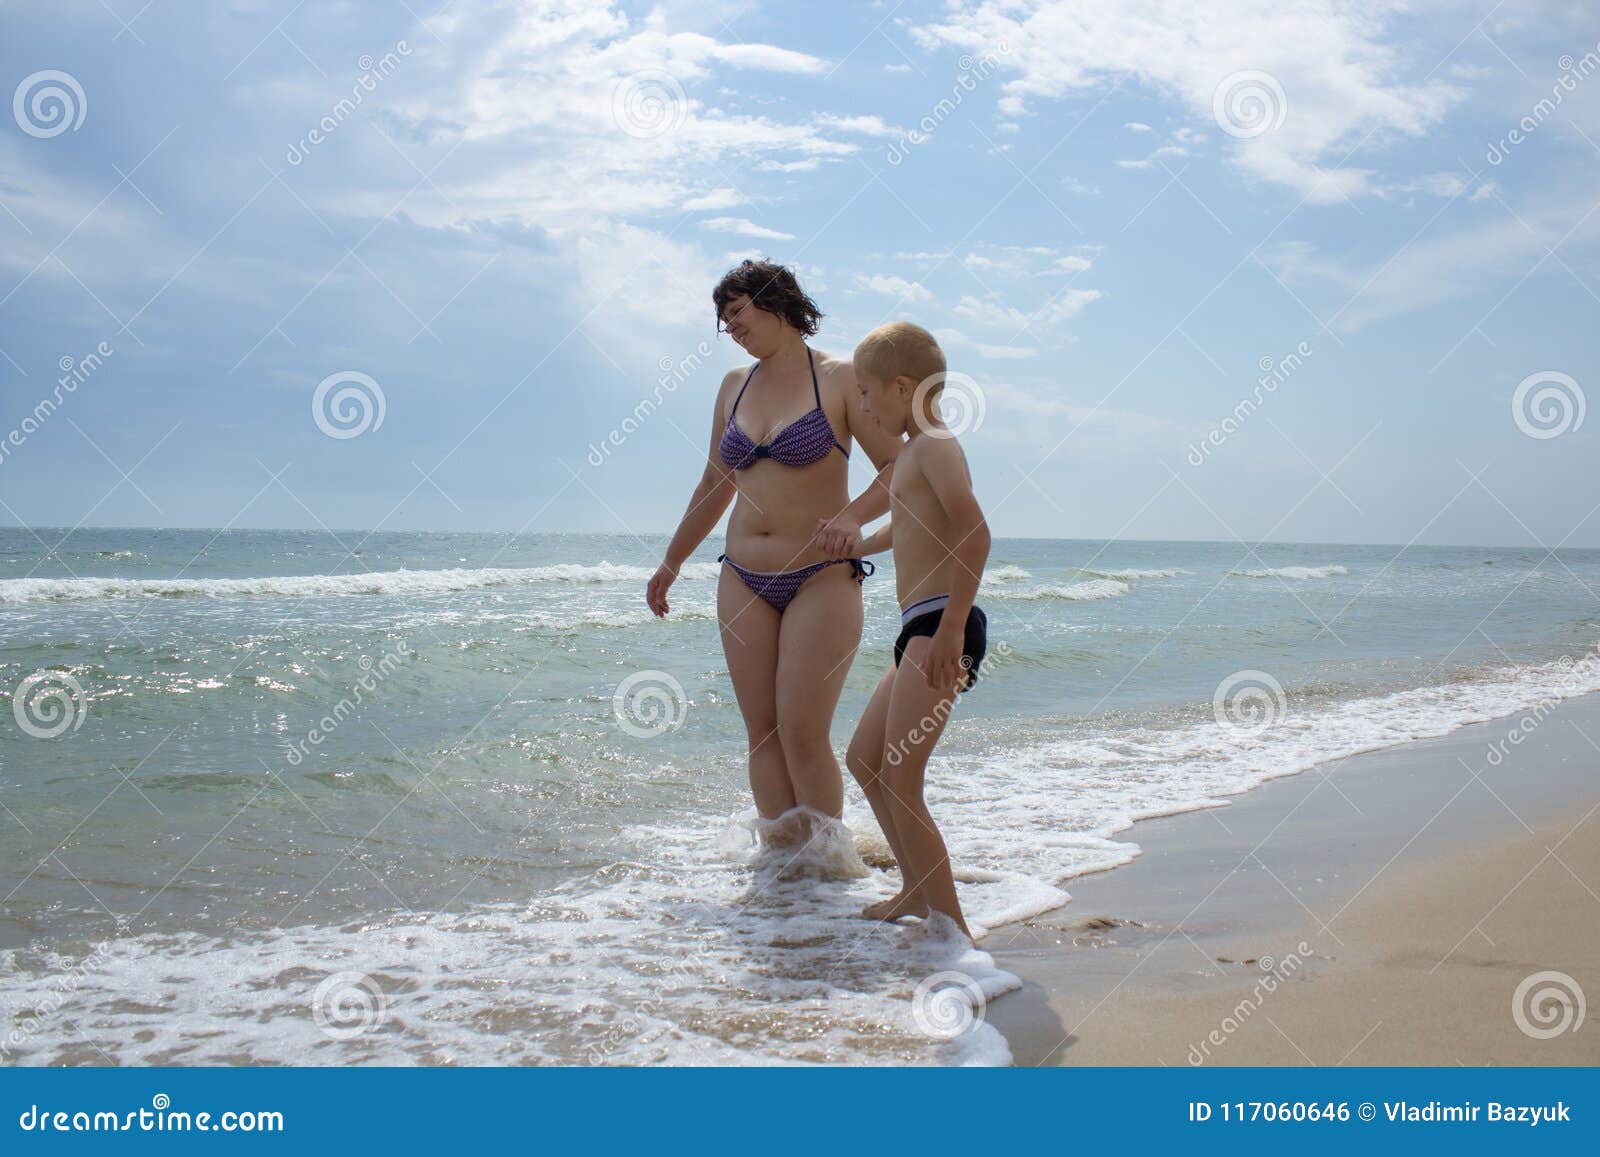 сын на пляже голым фото 59